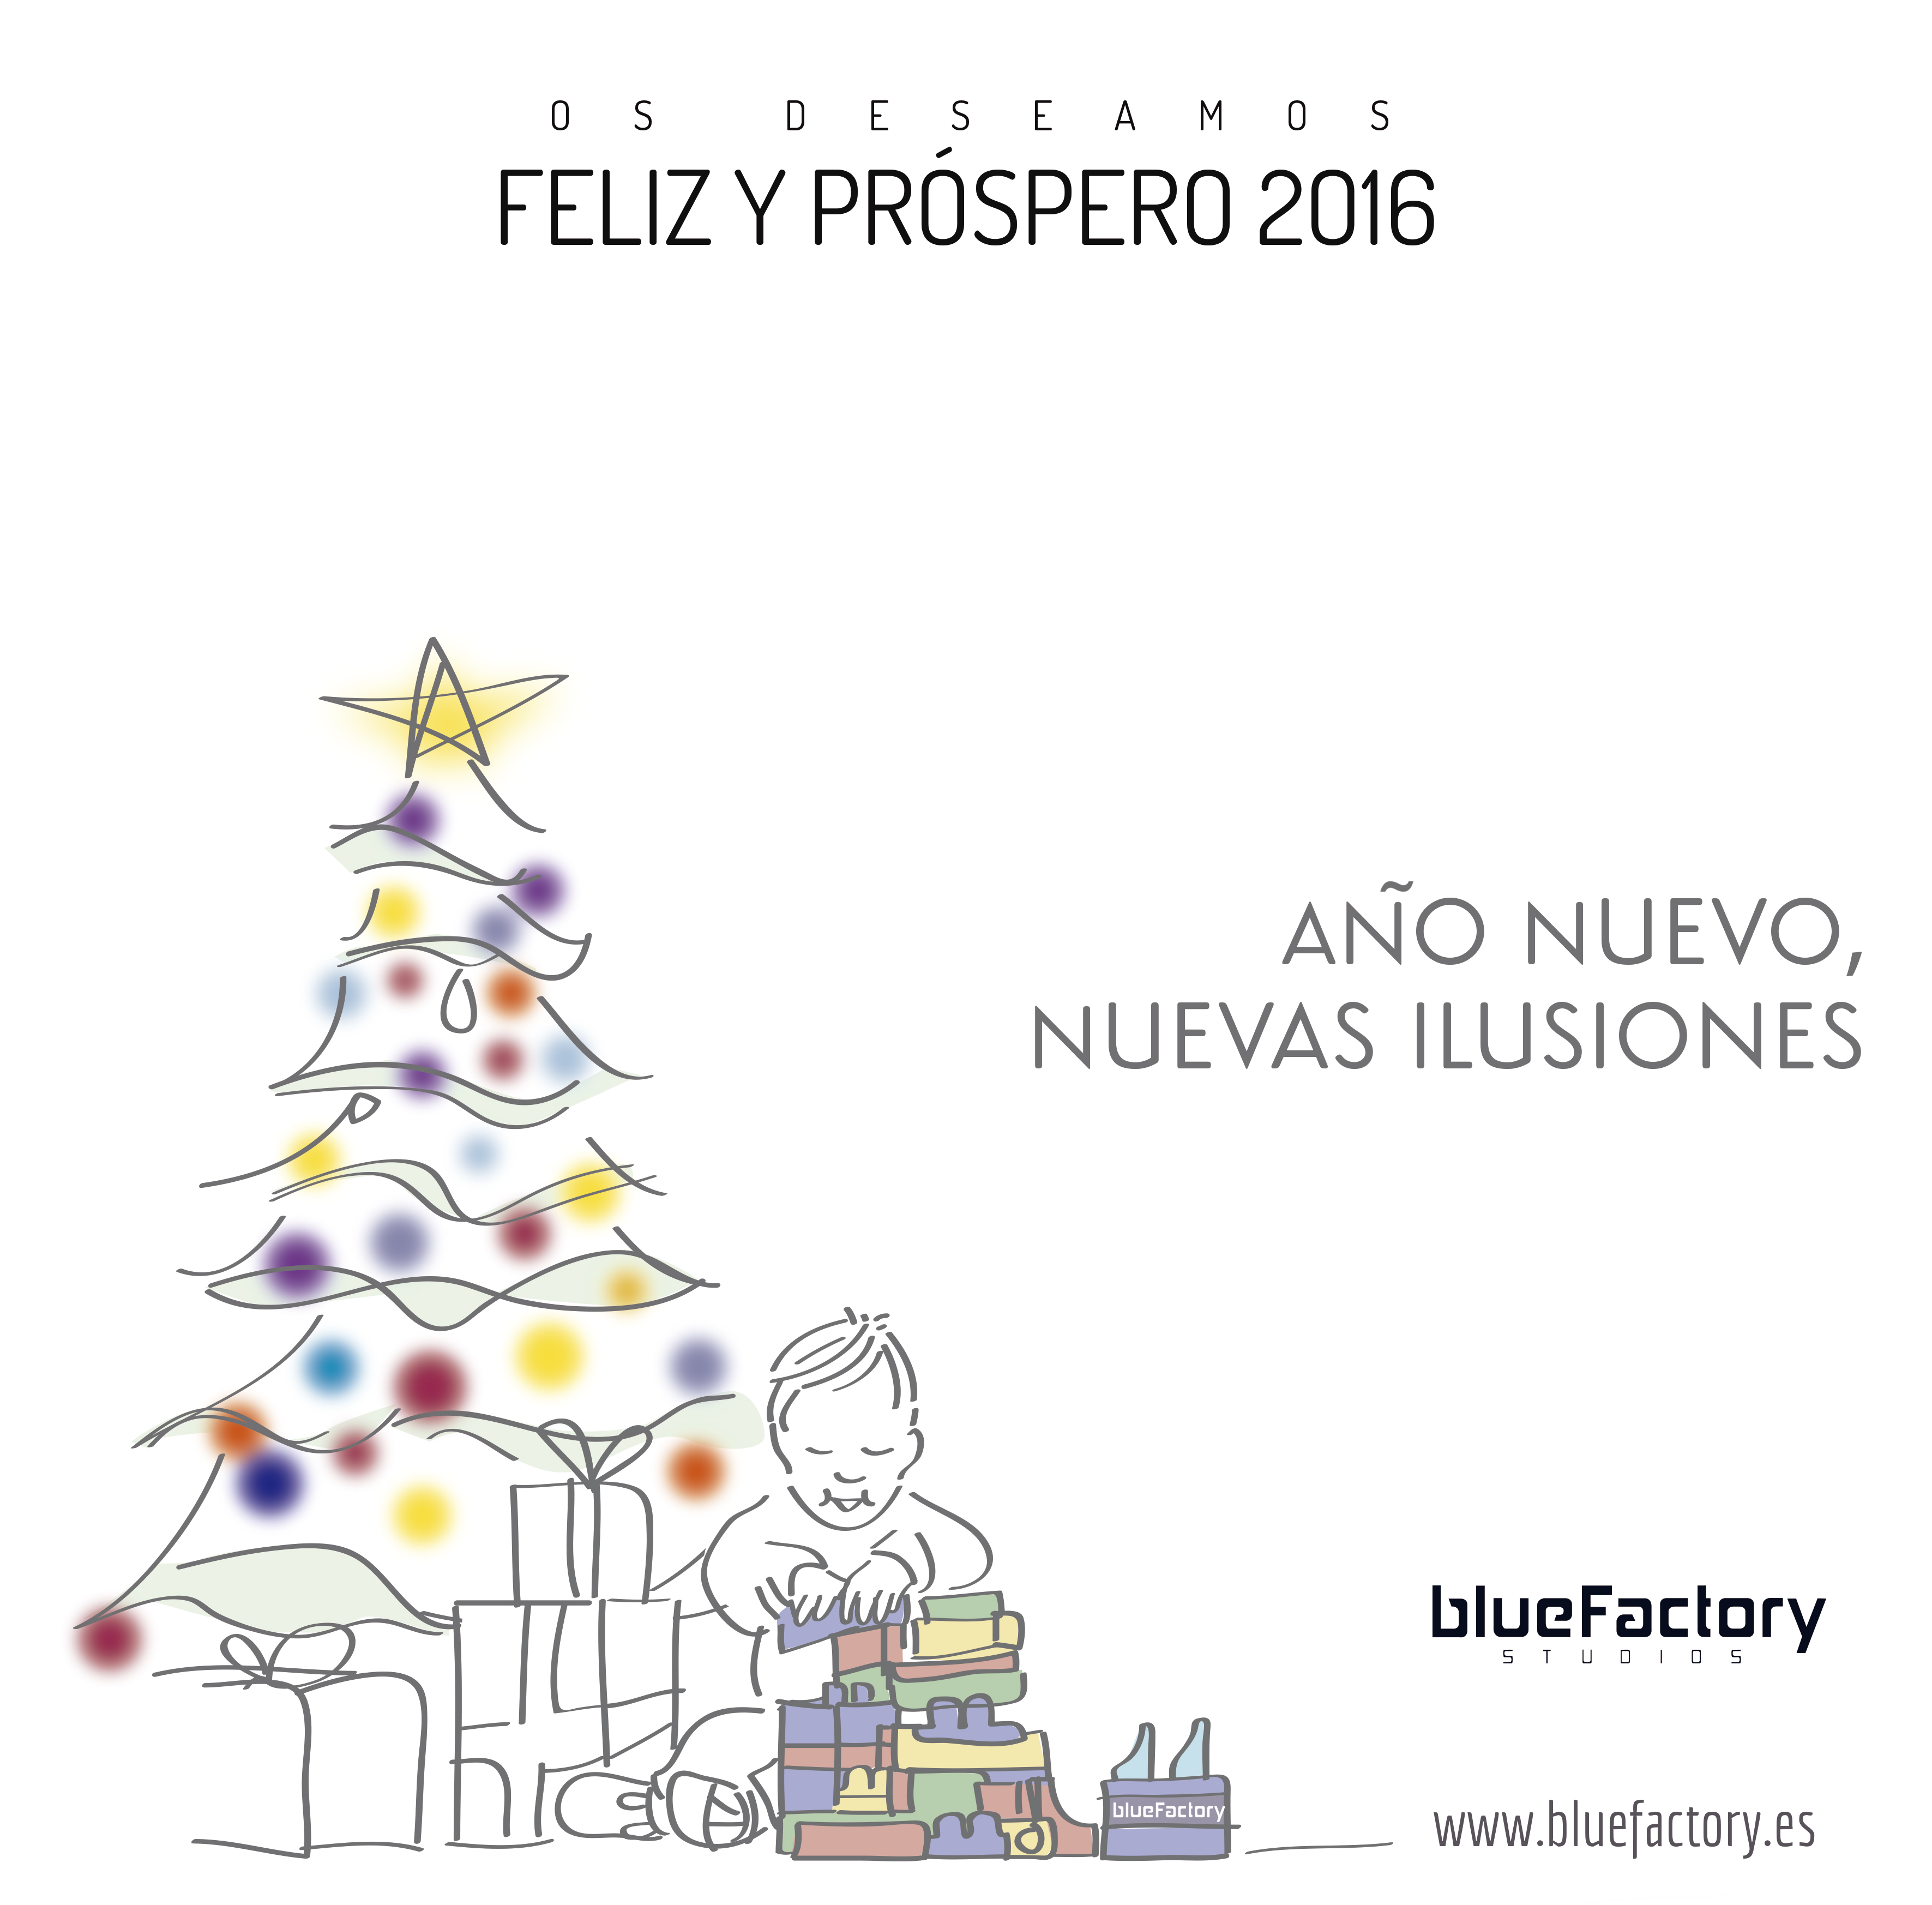 Bluefactory Studios les desea una feliz Navidad